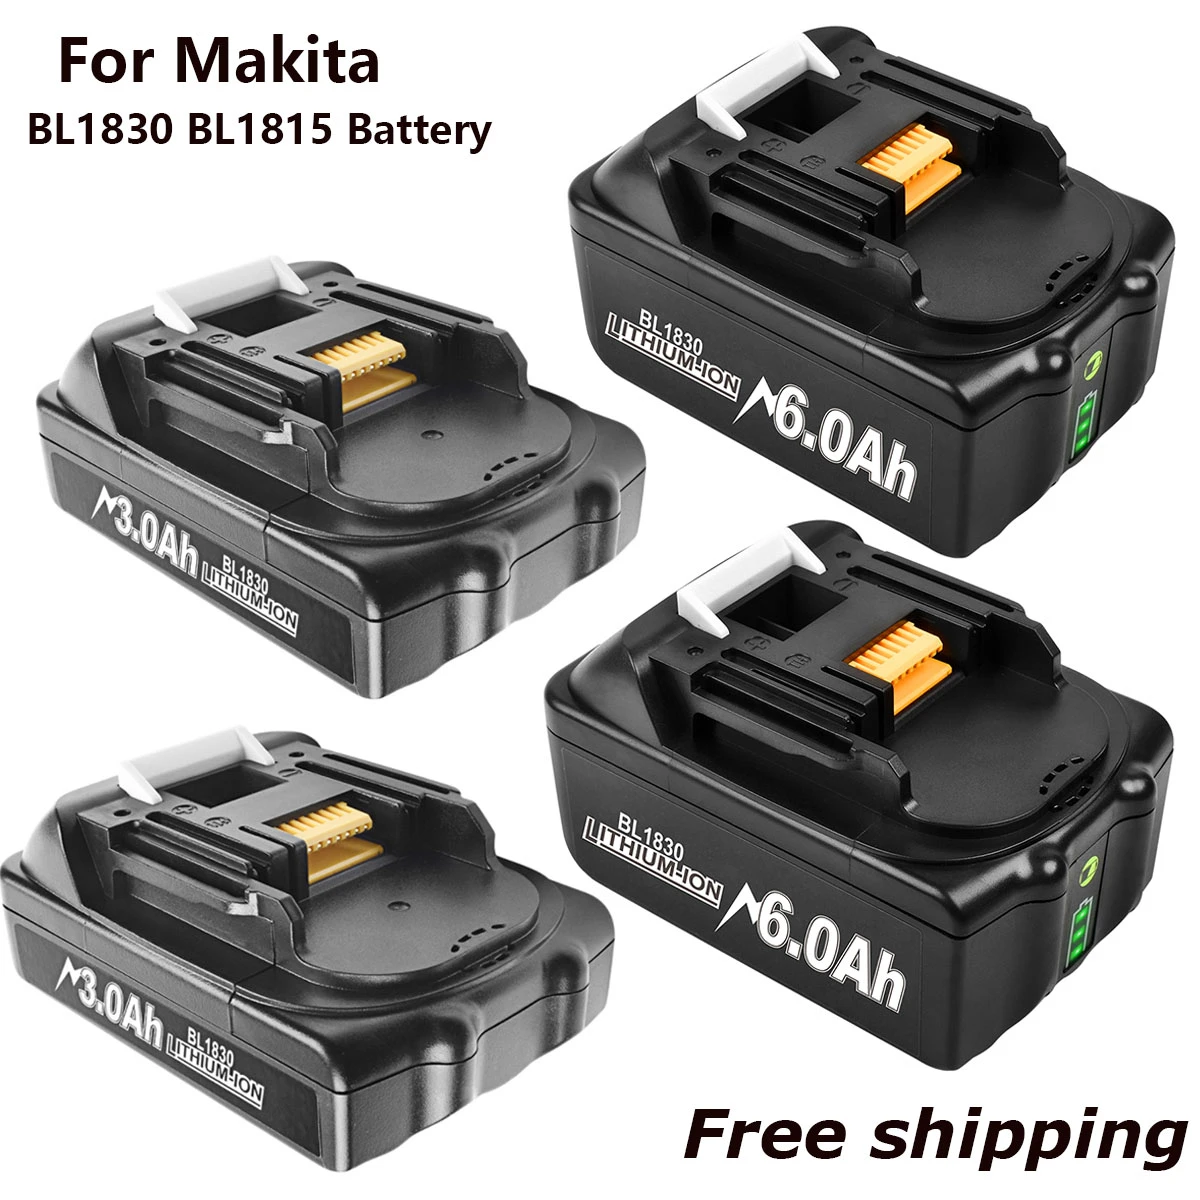 Replacement Batteries Makita 18v | Makita Rechargeable Battery - 18v Bl1815  3.0mah - Aliexpress